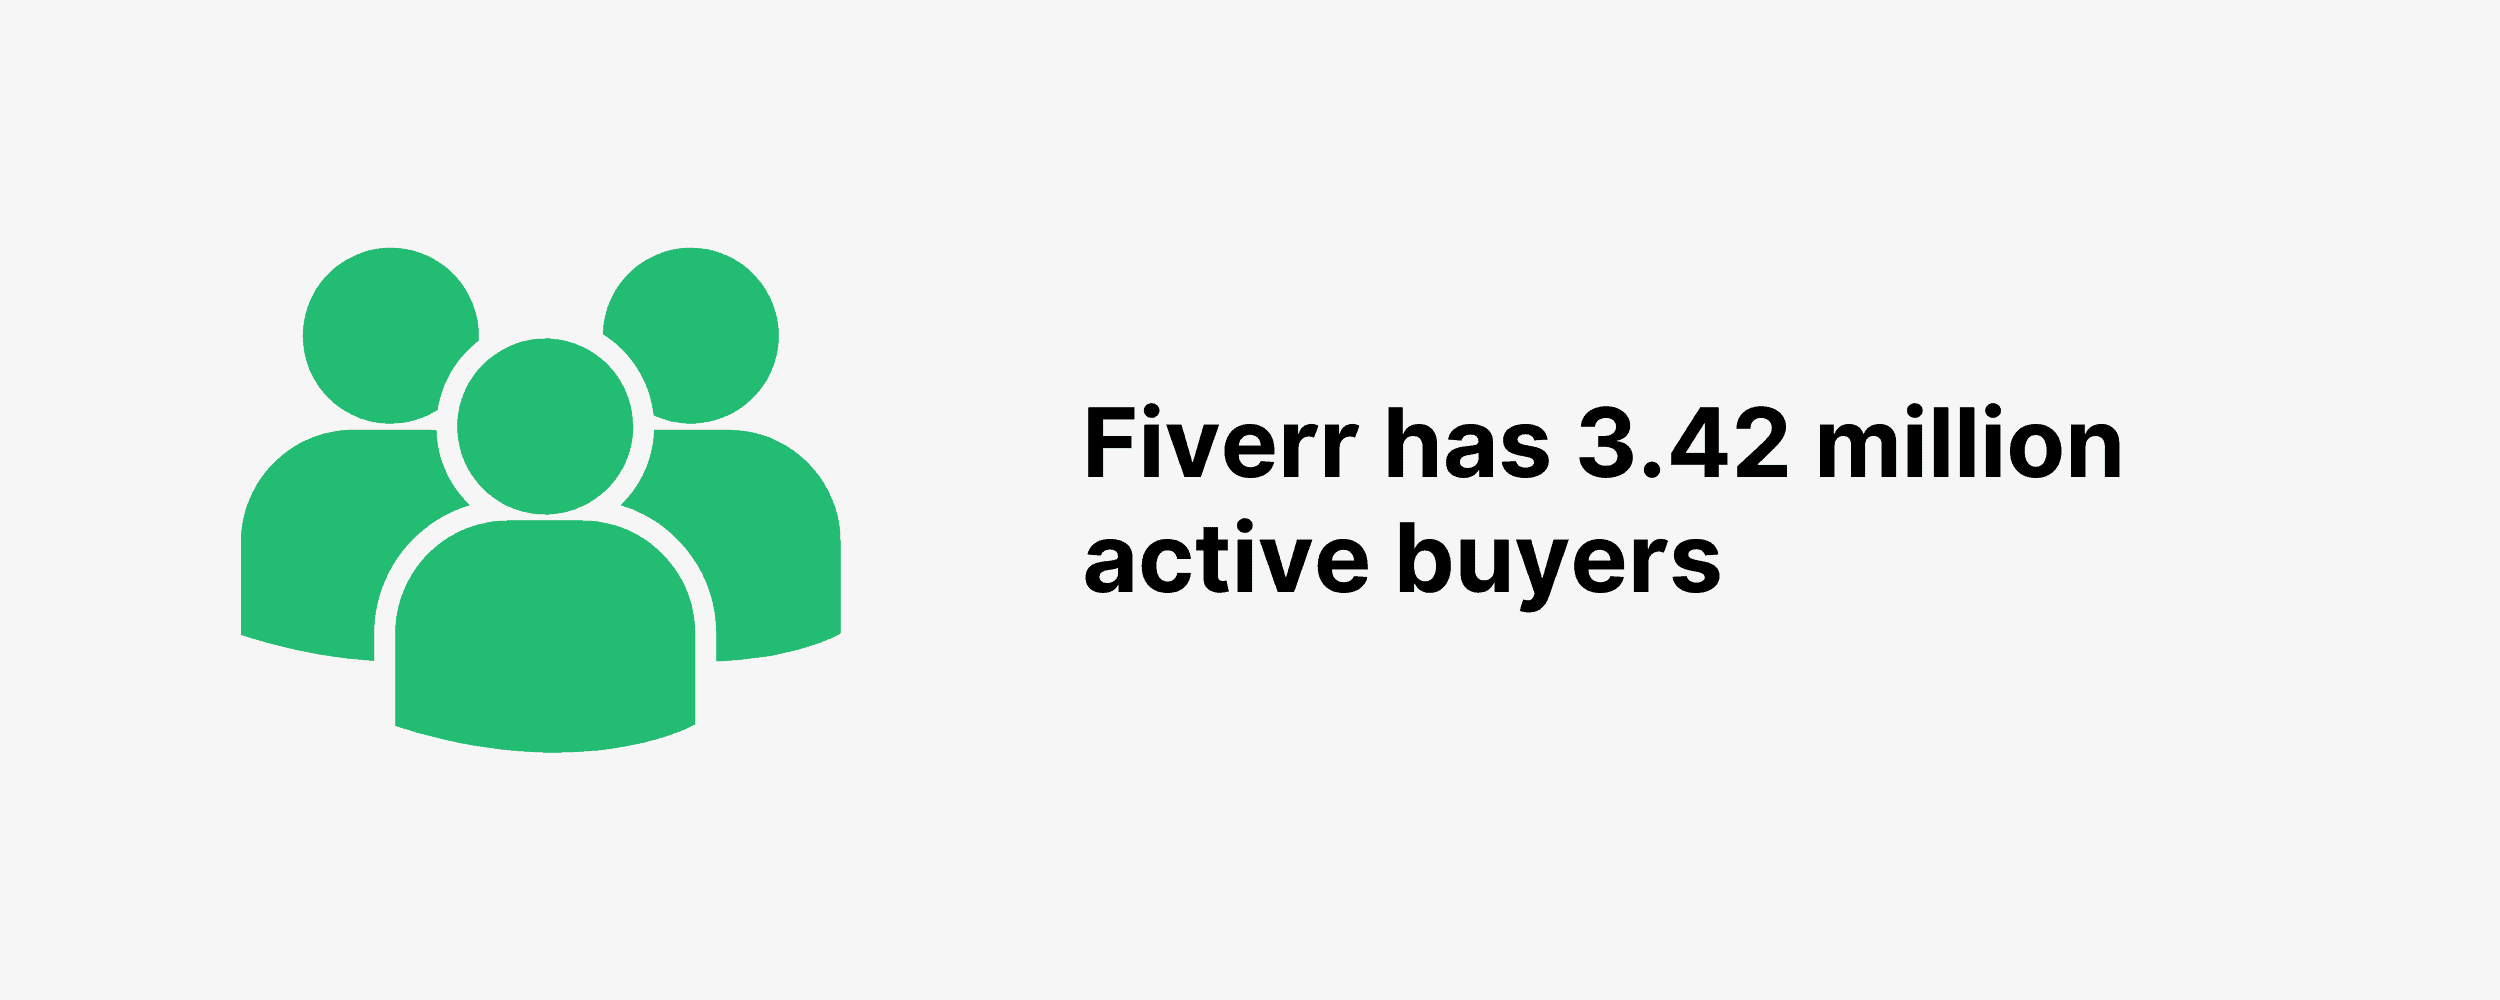 Fiverr has 3.42 million active buyers